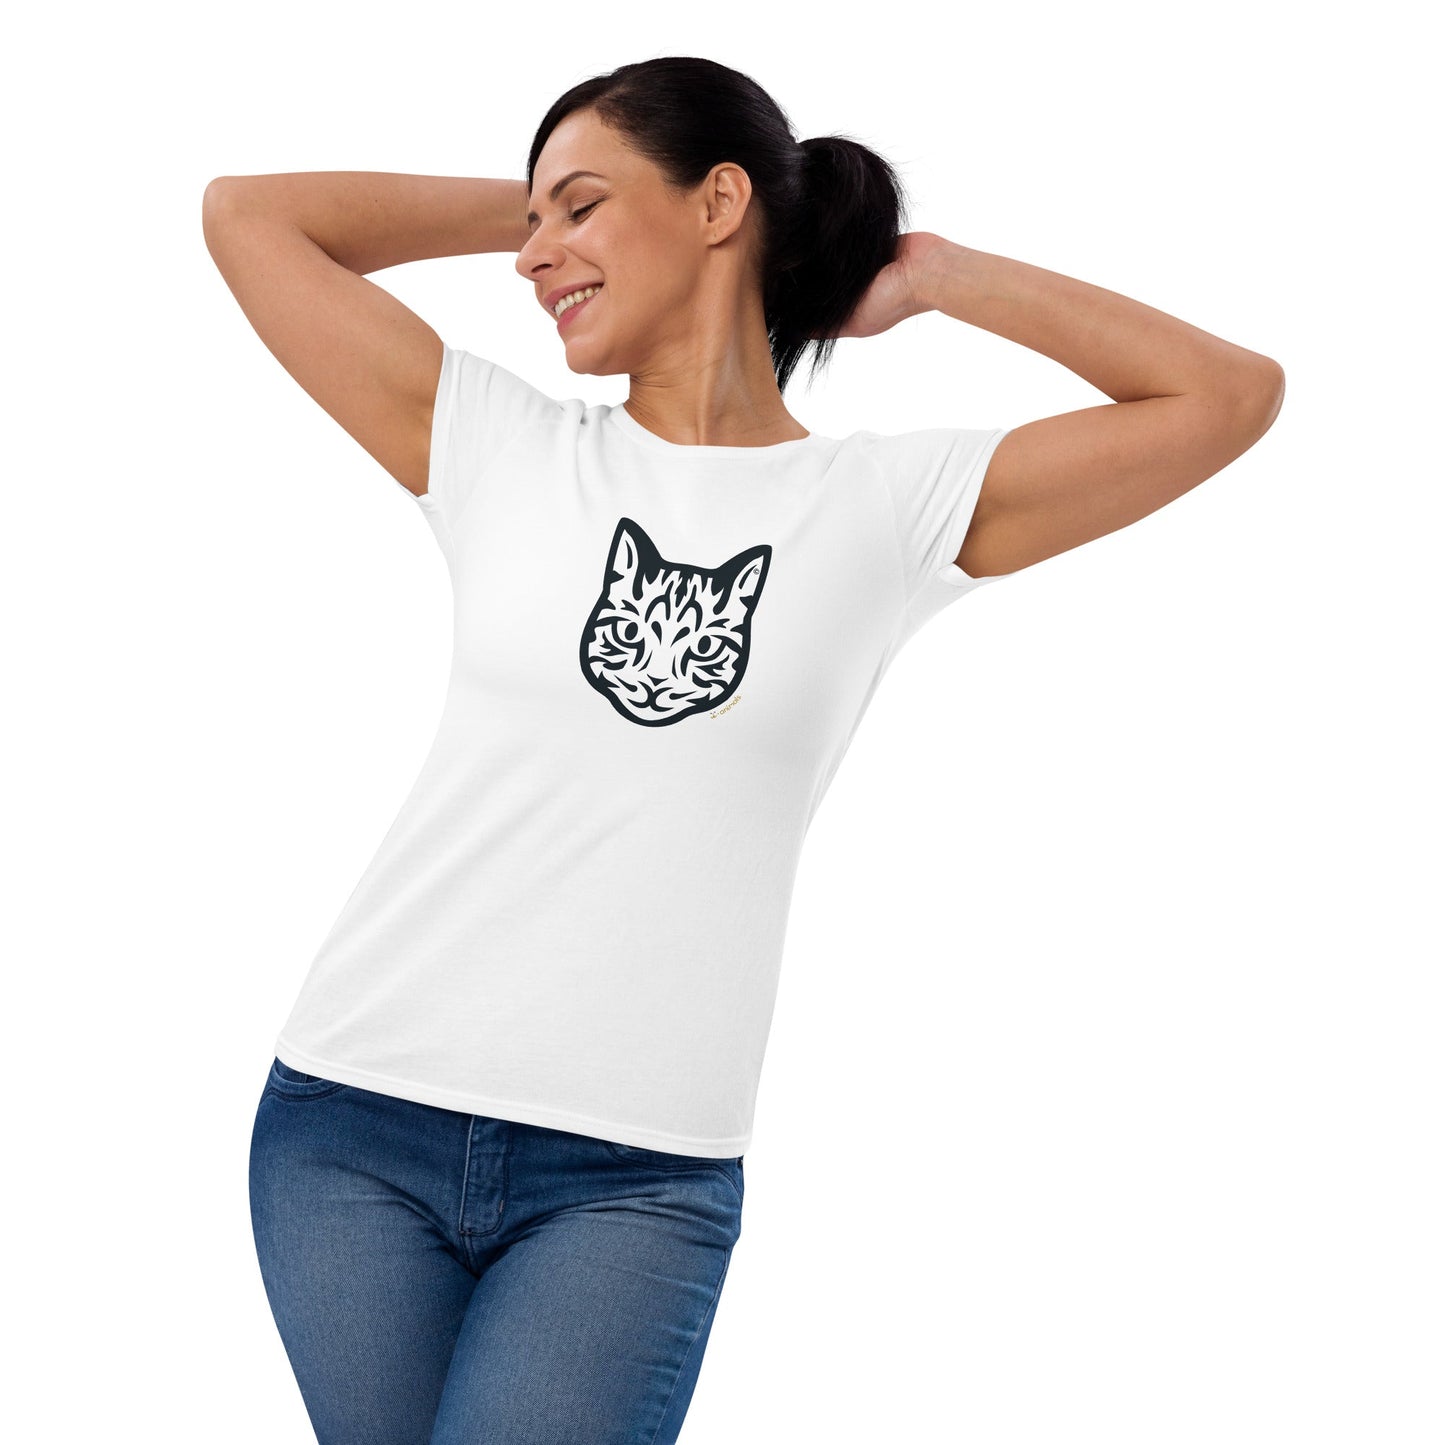 Camiseta feminina de manga curta - Gato Tigrado - Tribal - Cores Claras i-animals